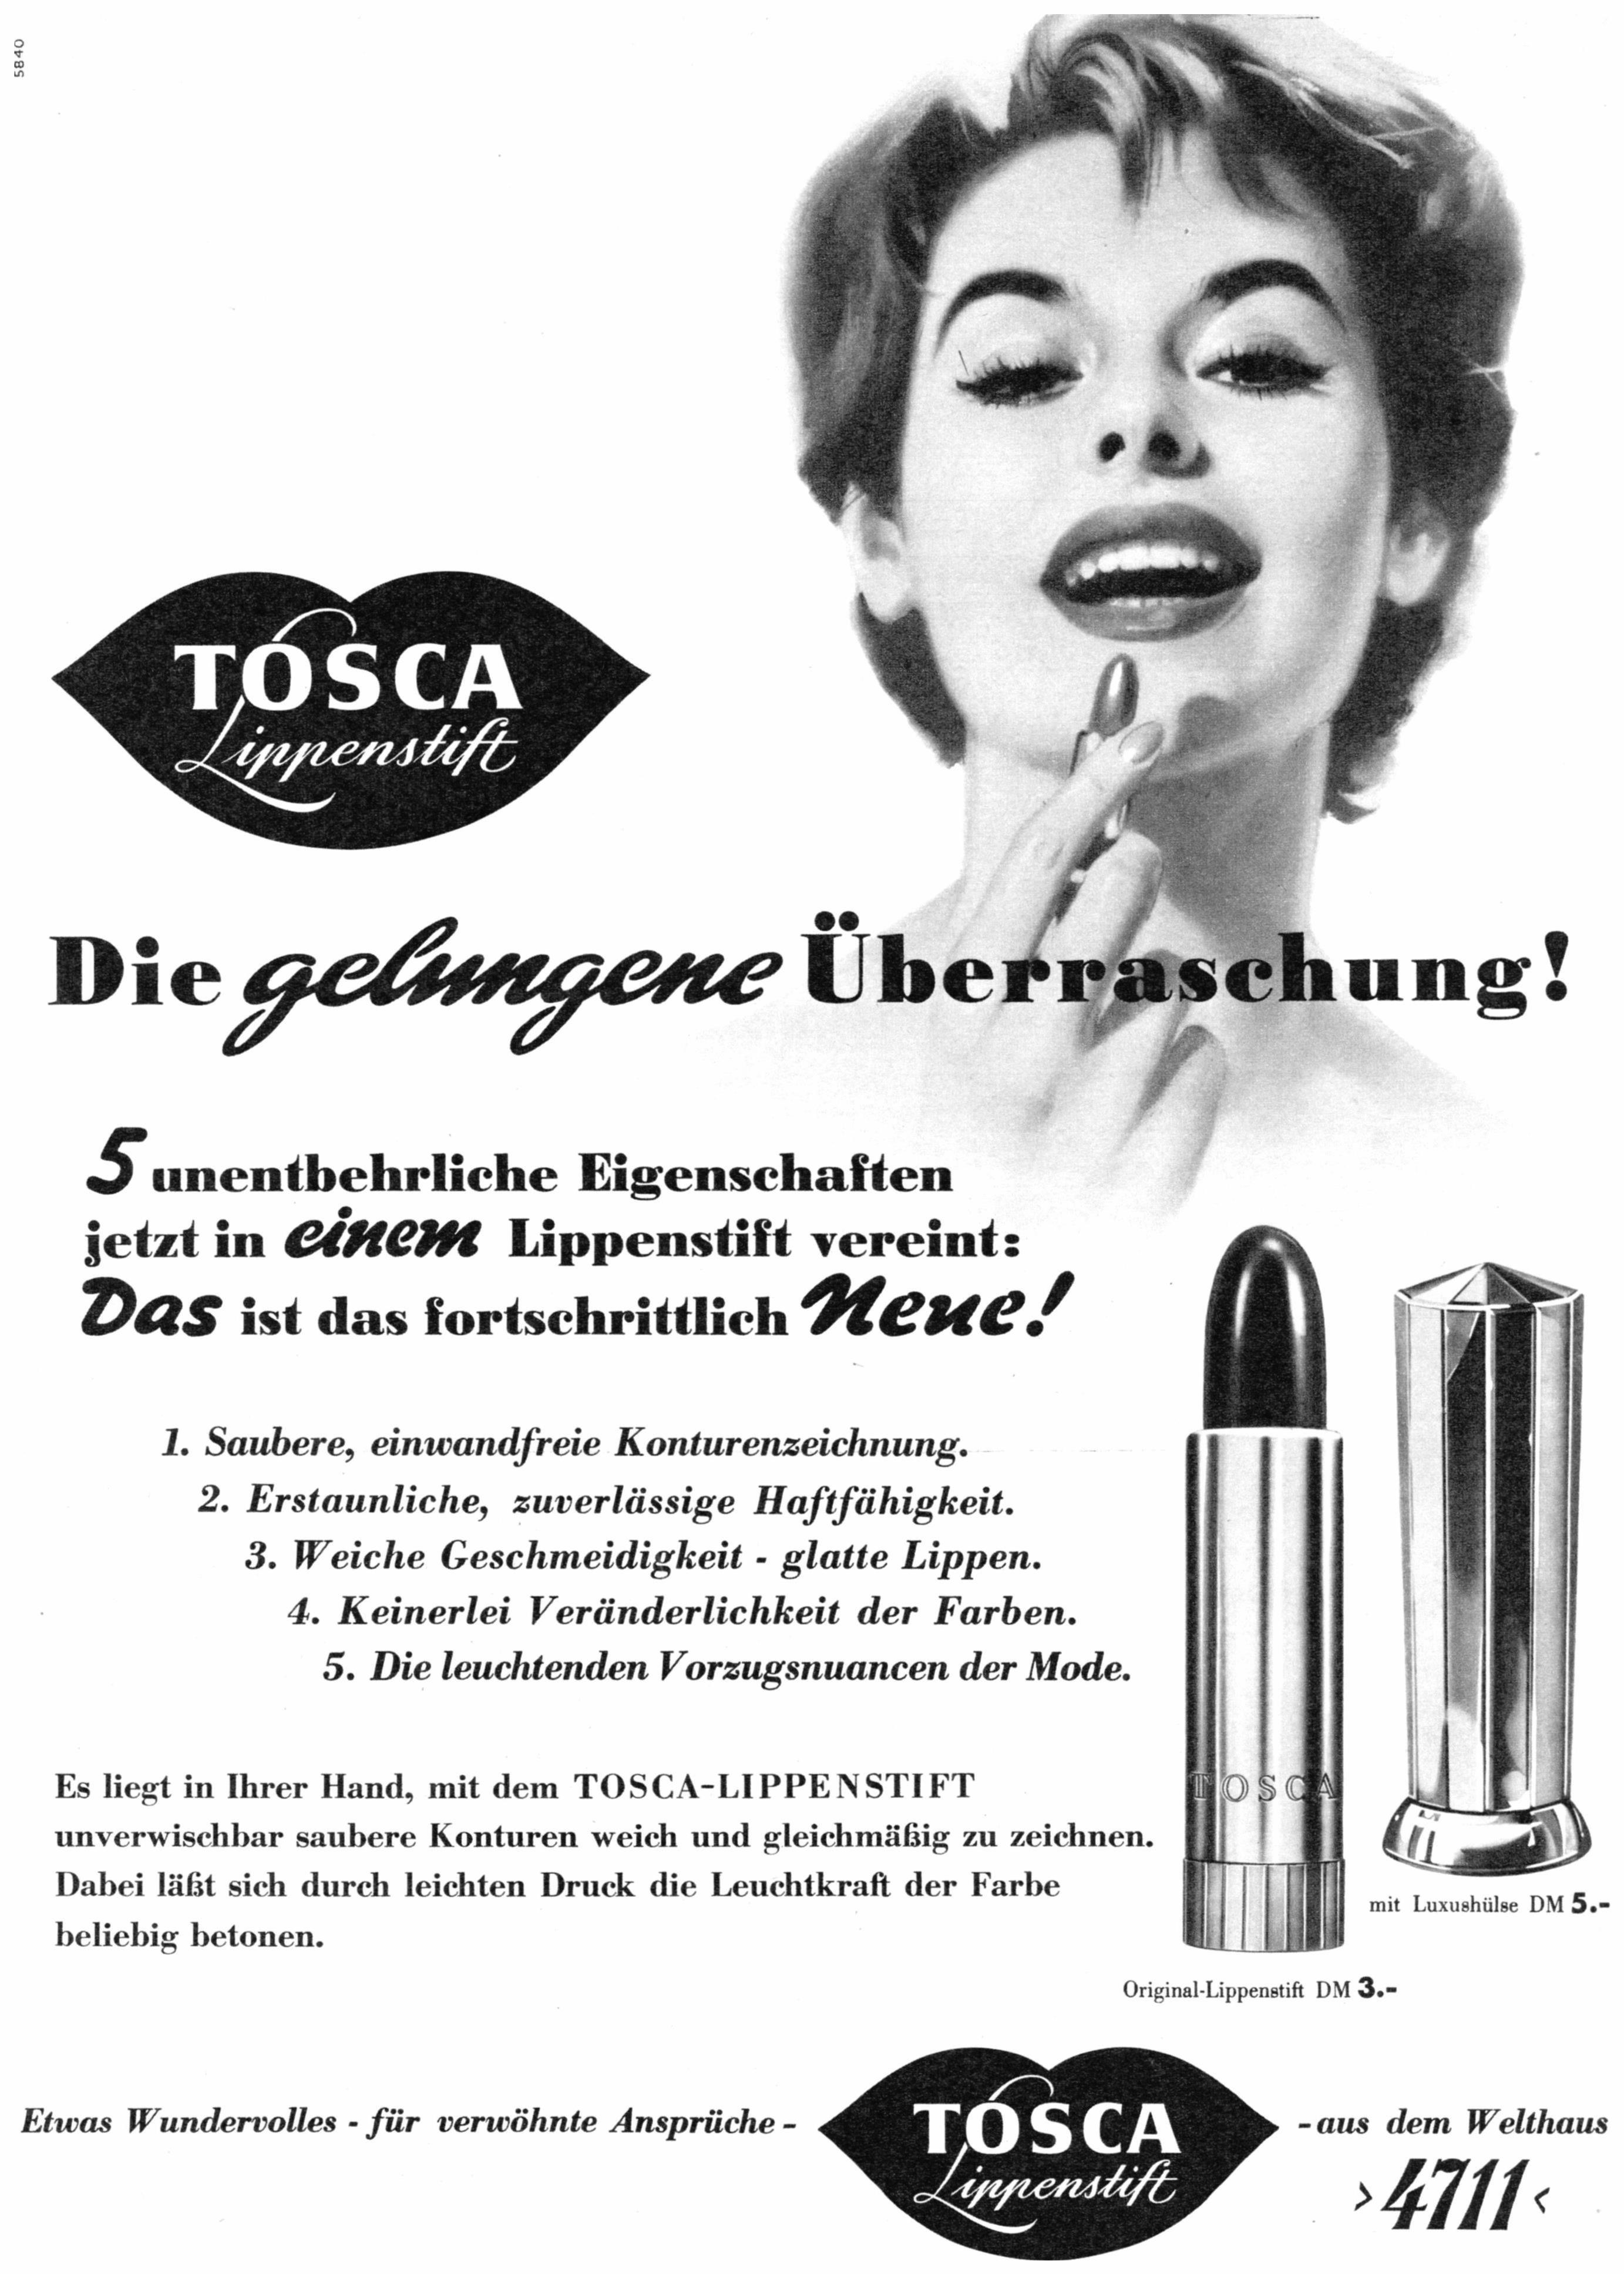 Tosca 1958 0.jpg